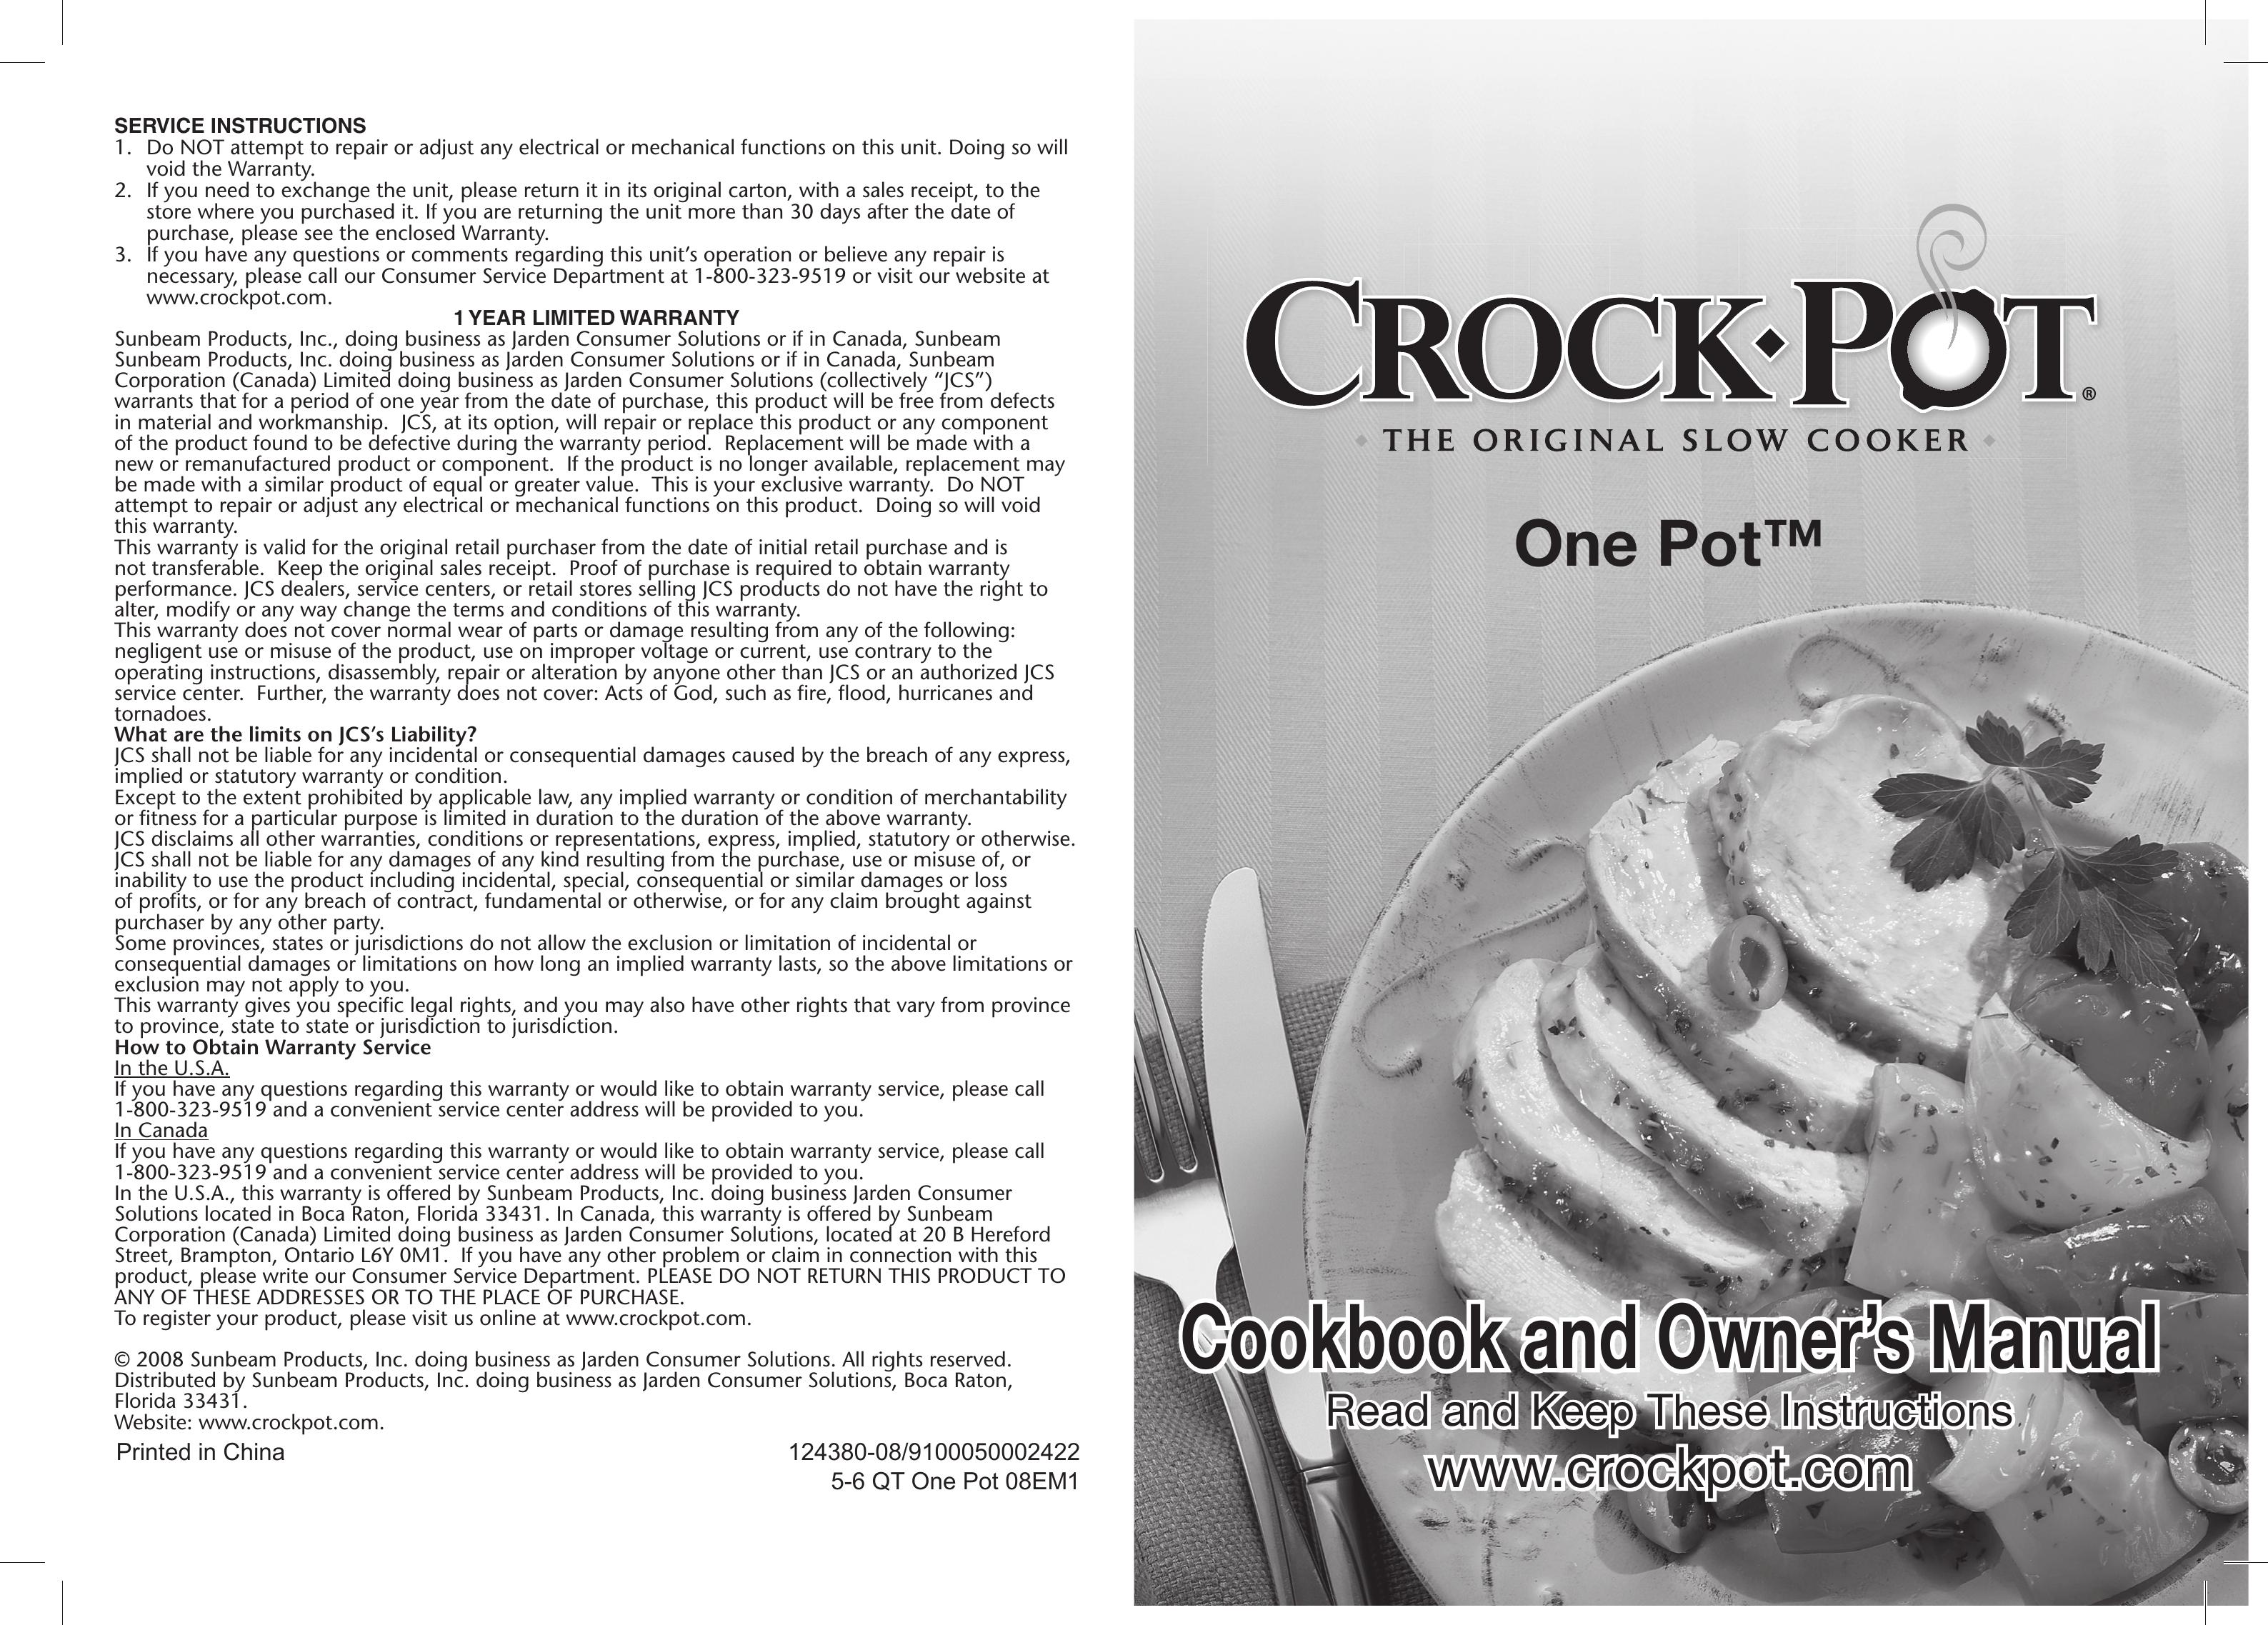 Crock-Pot OnePot Slow Cooker User Manual